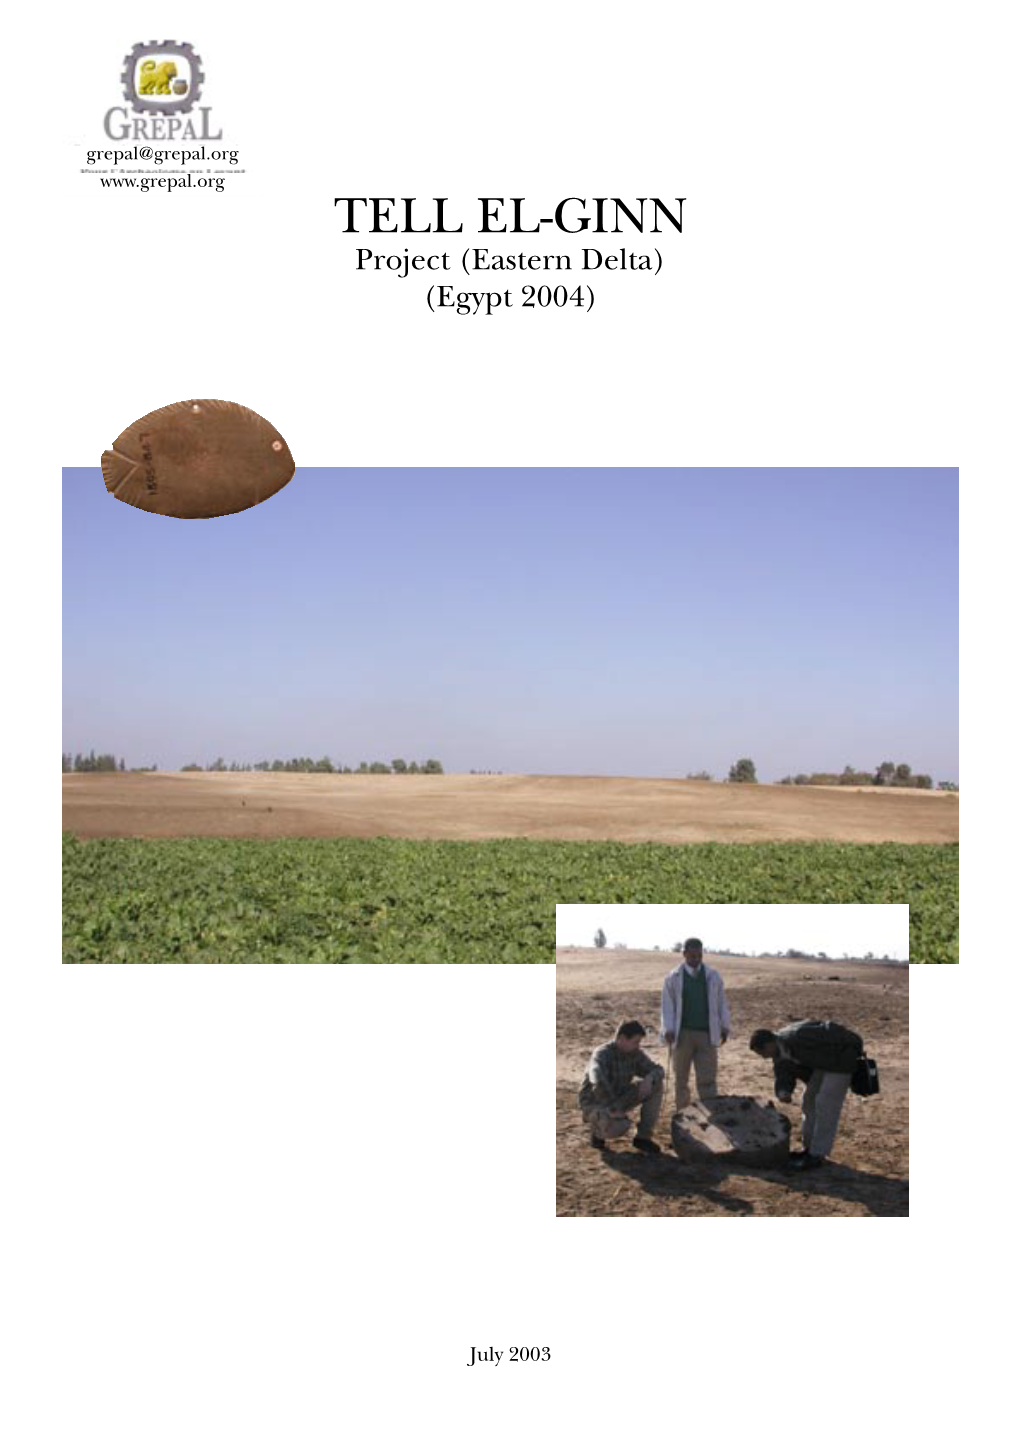 TELL EL-GINN Project (Eastern Delta) (Egypt 2004)